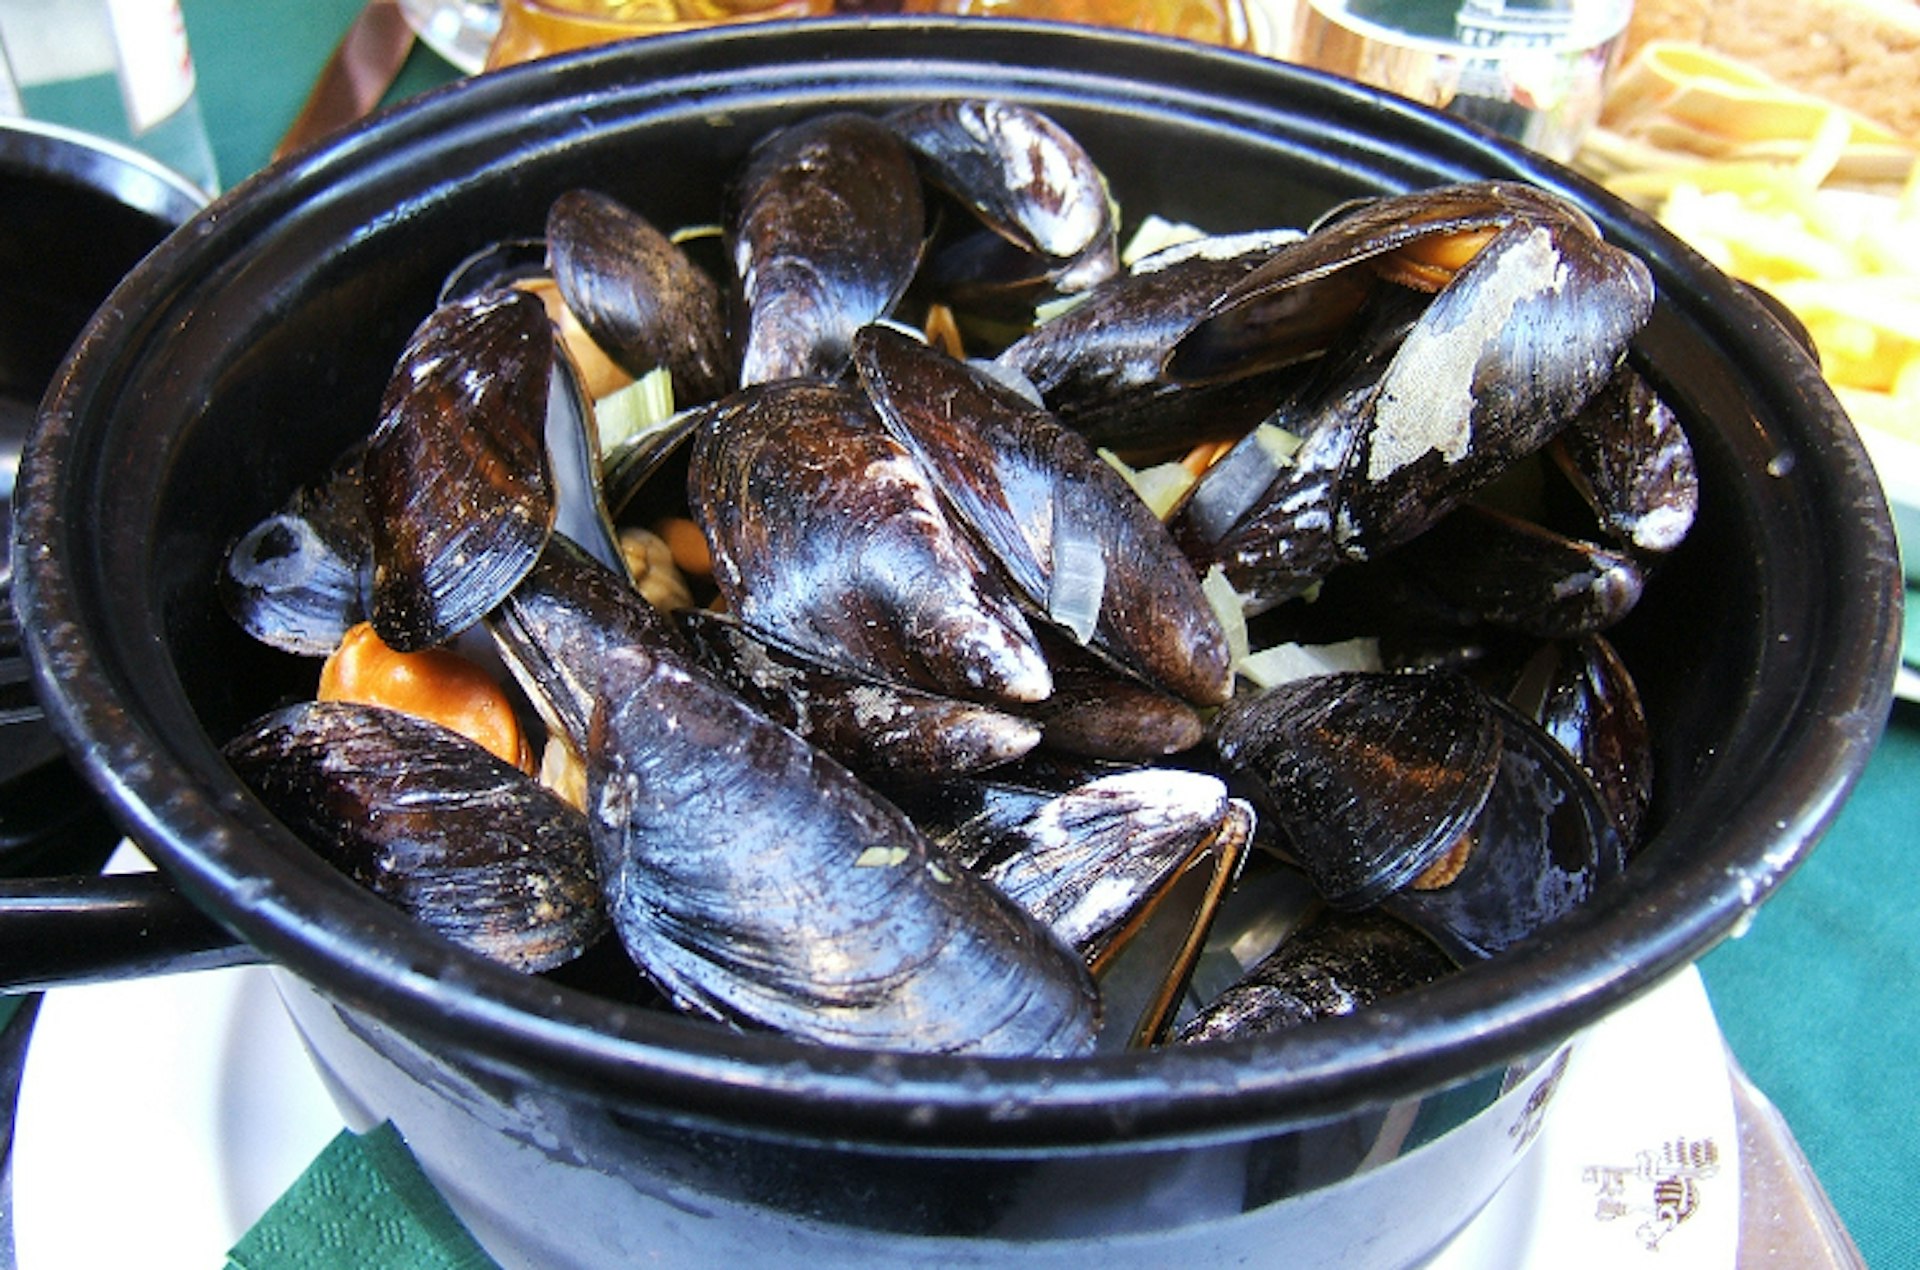 Mussels in Brussels